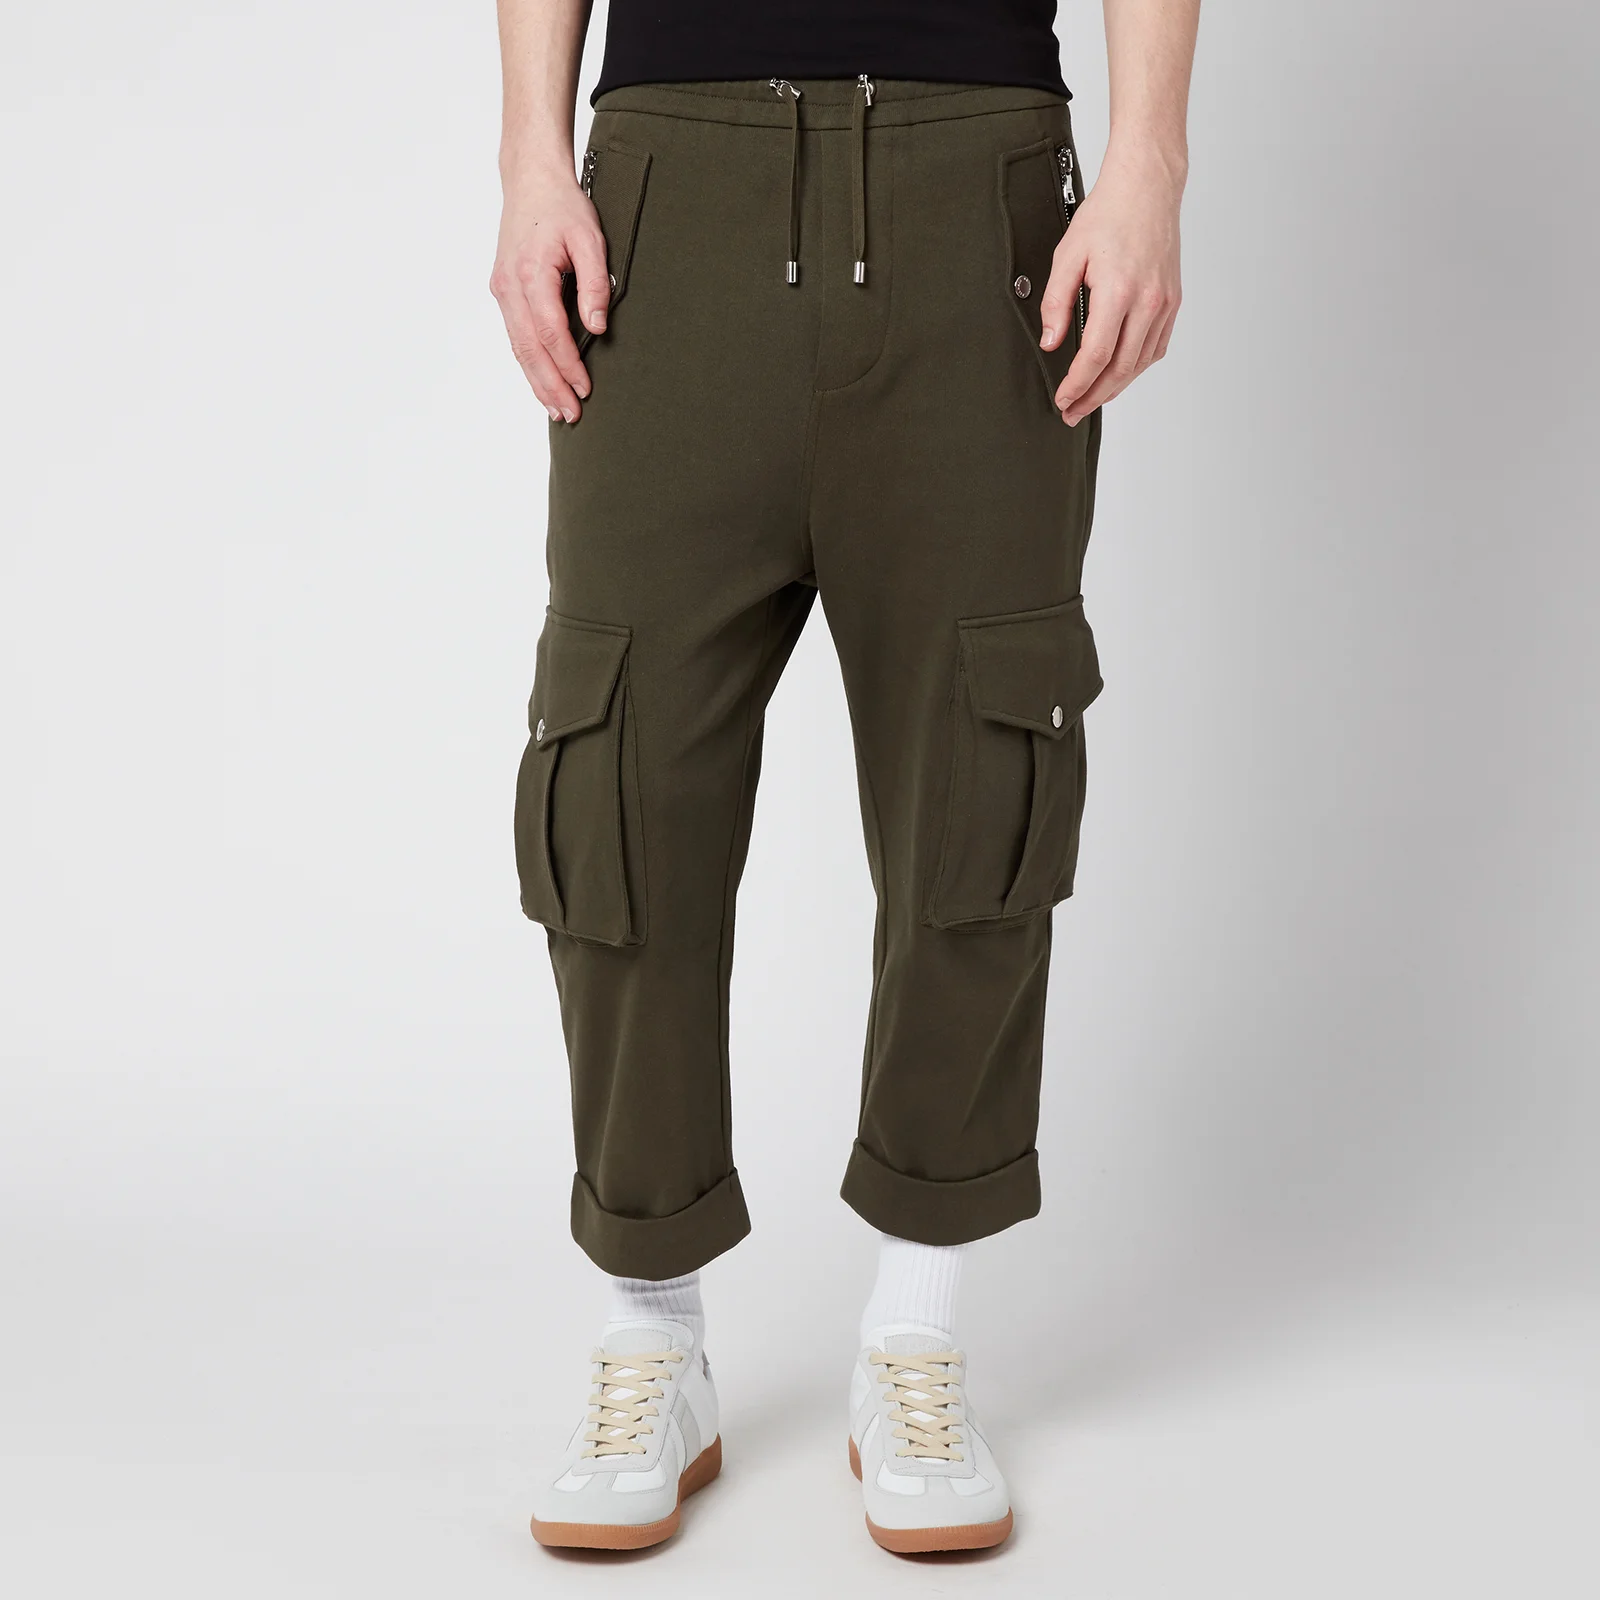 Balmain Men's Jersey Cargo Pants - Khaki Image 1